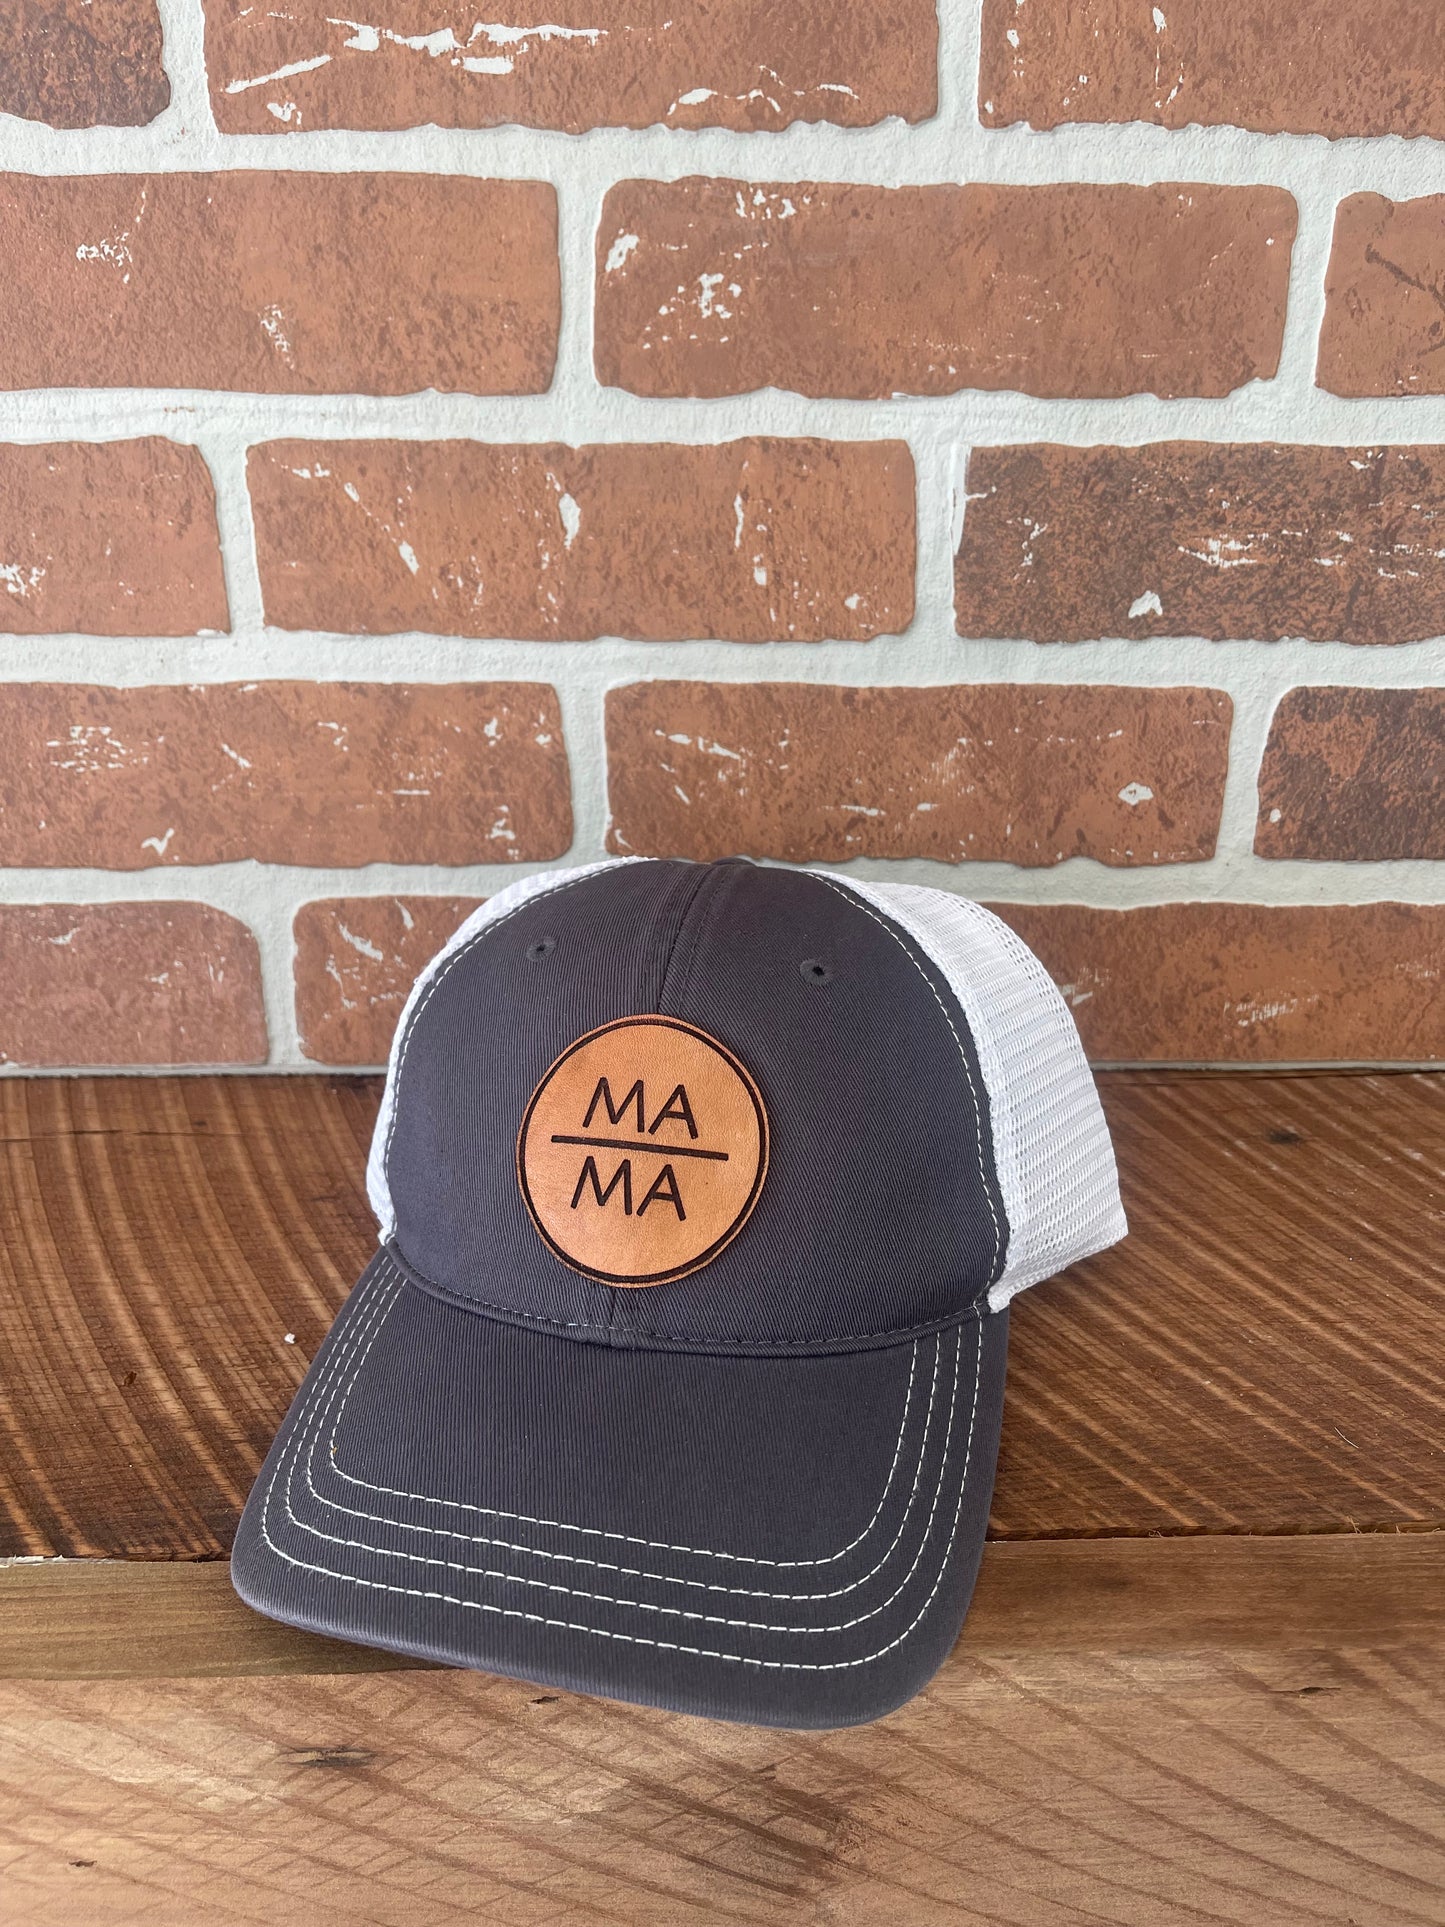 MAMA Leather Patch Hat--Richardson 111